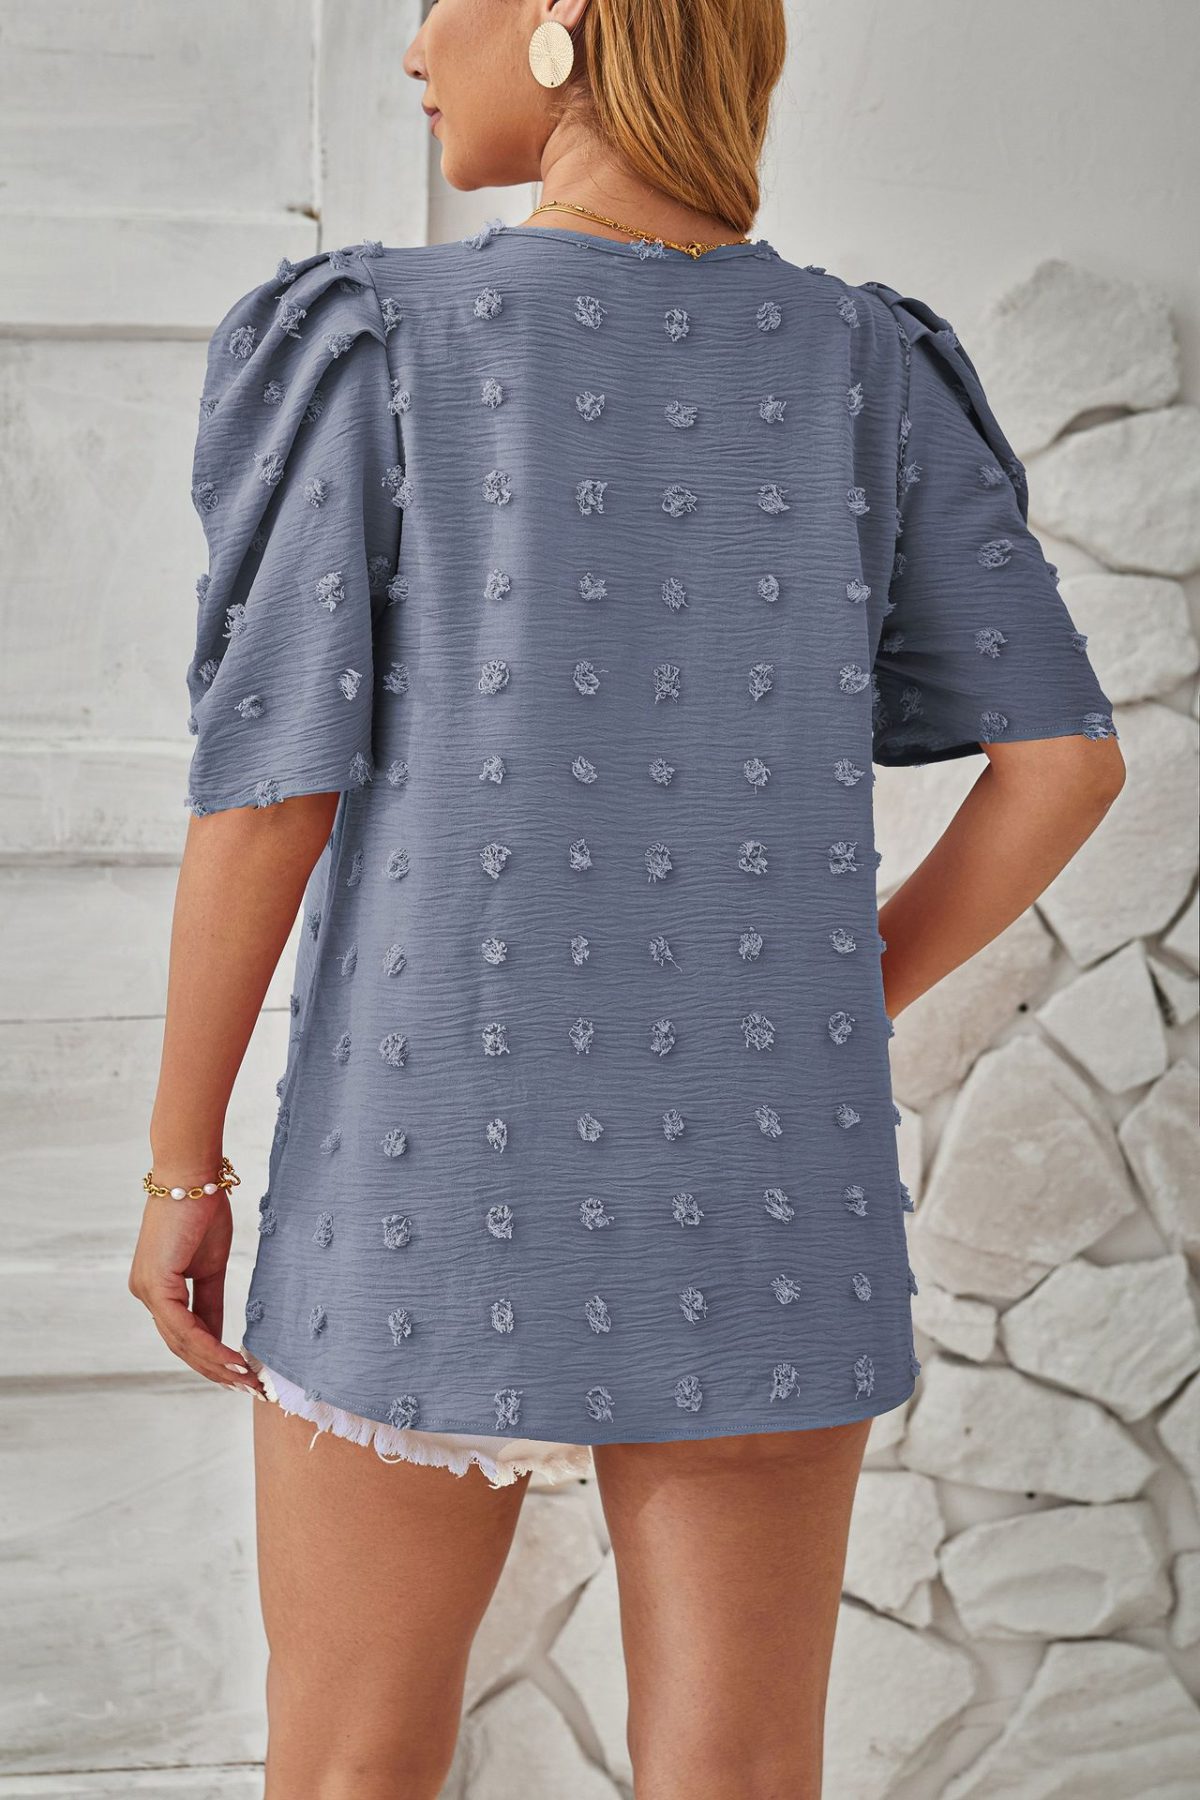 Jacquard Fur Ball Short Sleeve Square Collar Smocking Top Blouse in Blouses & Shirts